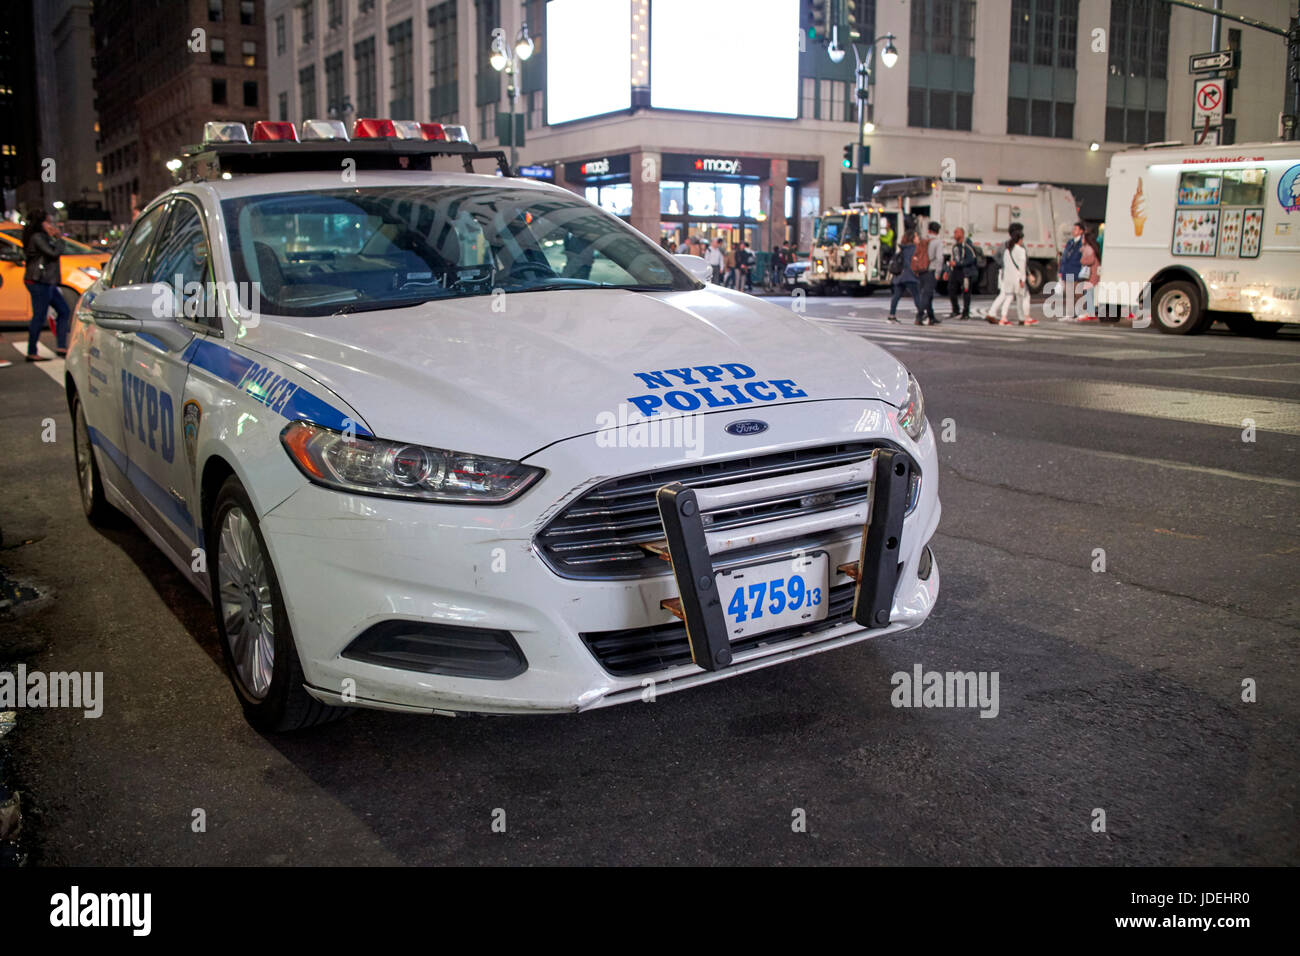 nypd police patrol car at night New York City USA Stock Photo